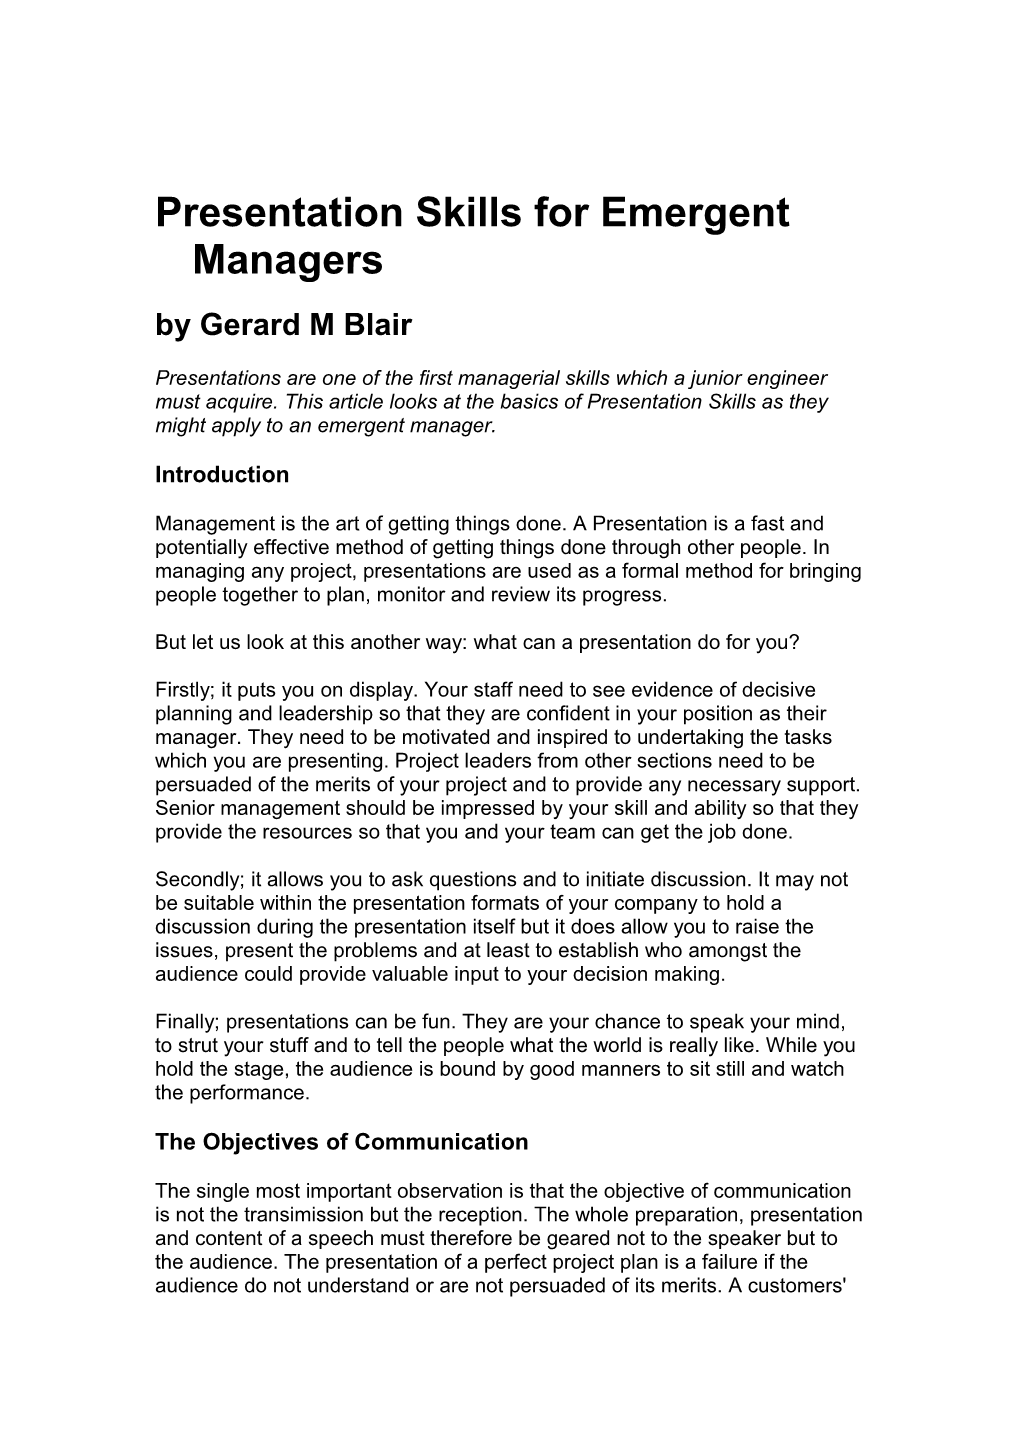 Presentation Skills for Emergent Managers